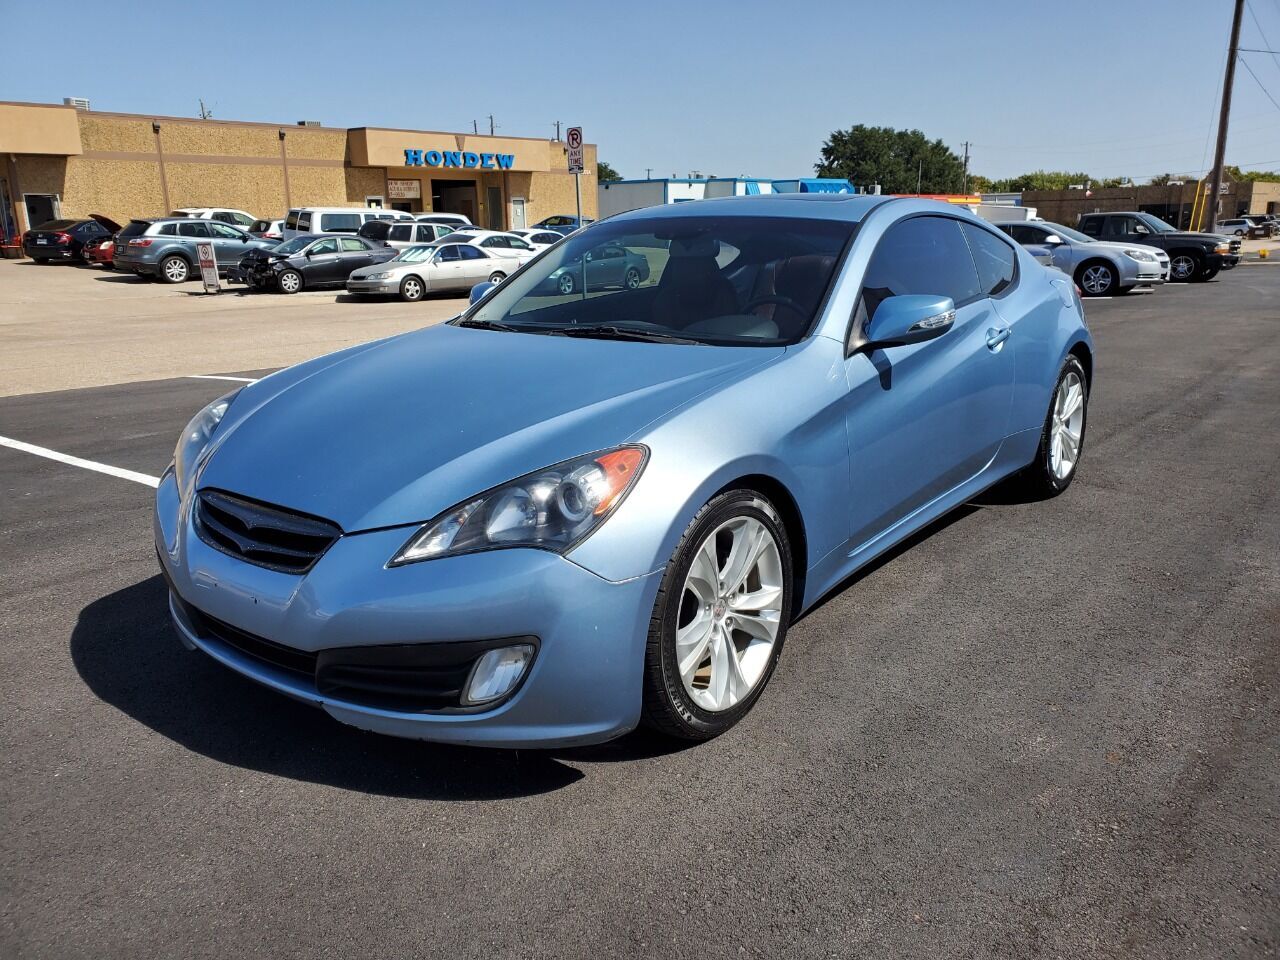 Used Hyundai Genesis Coupe for Sale in Dallas, TX CarGurus